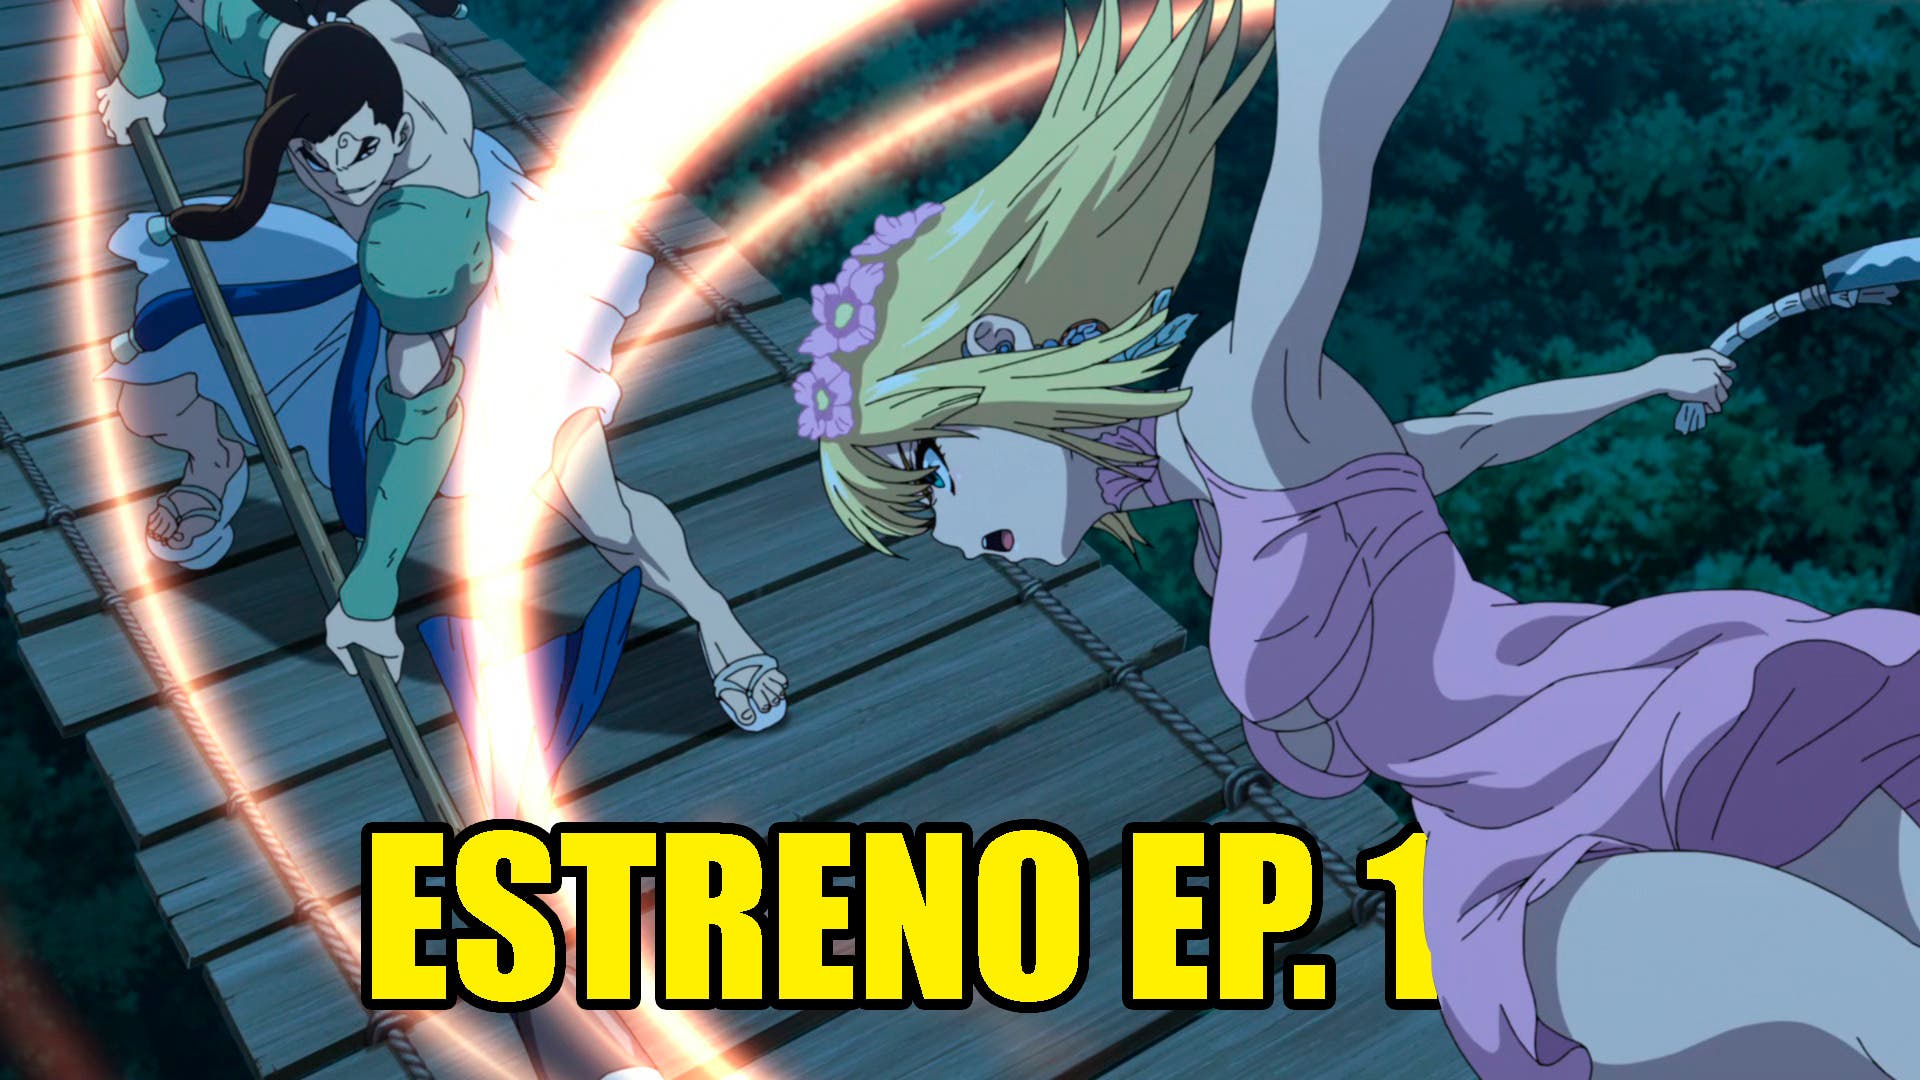 Ver Anime: Dr. Stone: Temporada 2 Capitulo 1 Online Latino HD - Pelisplus